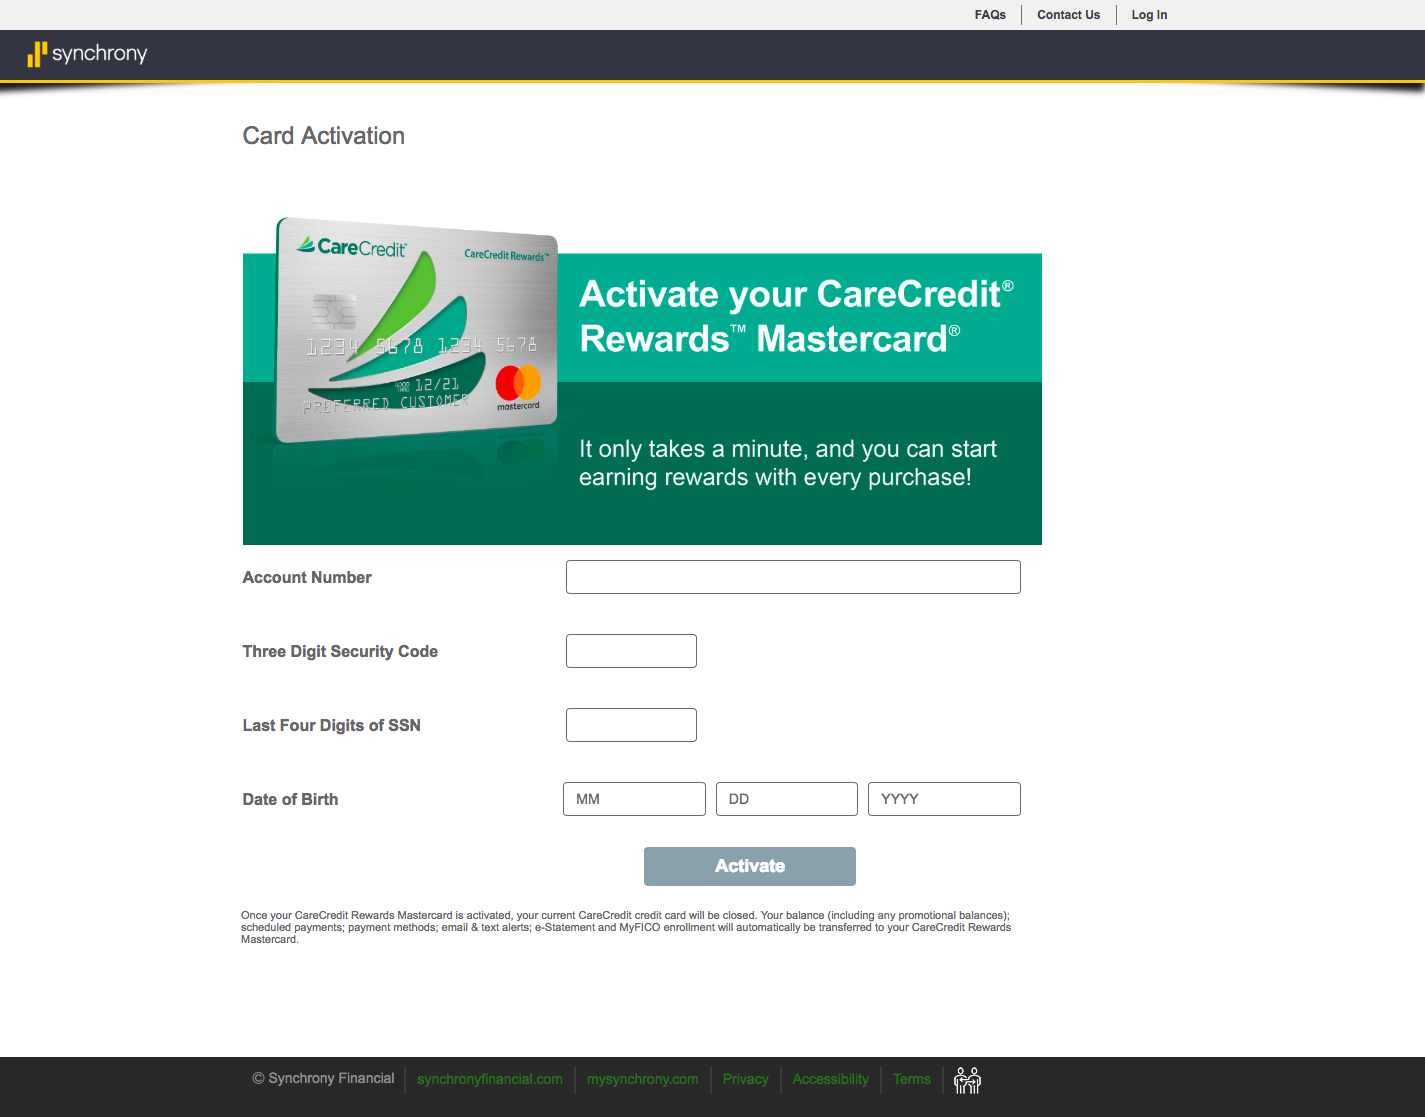 www.carecredit.com/mastercard - CareCredit Mastercard Activation